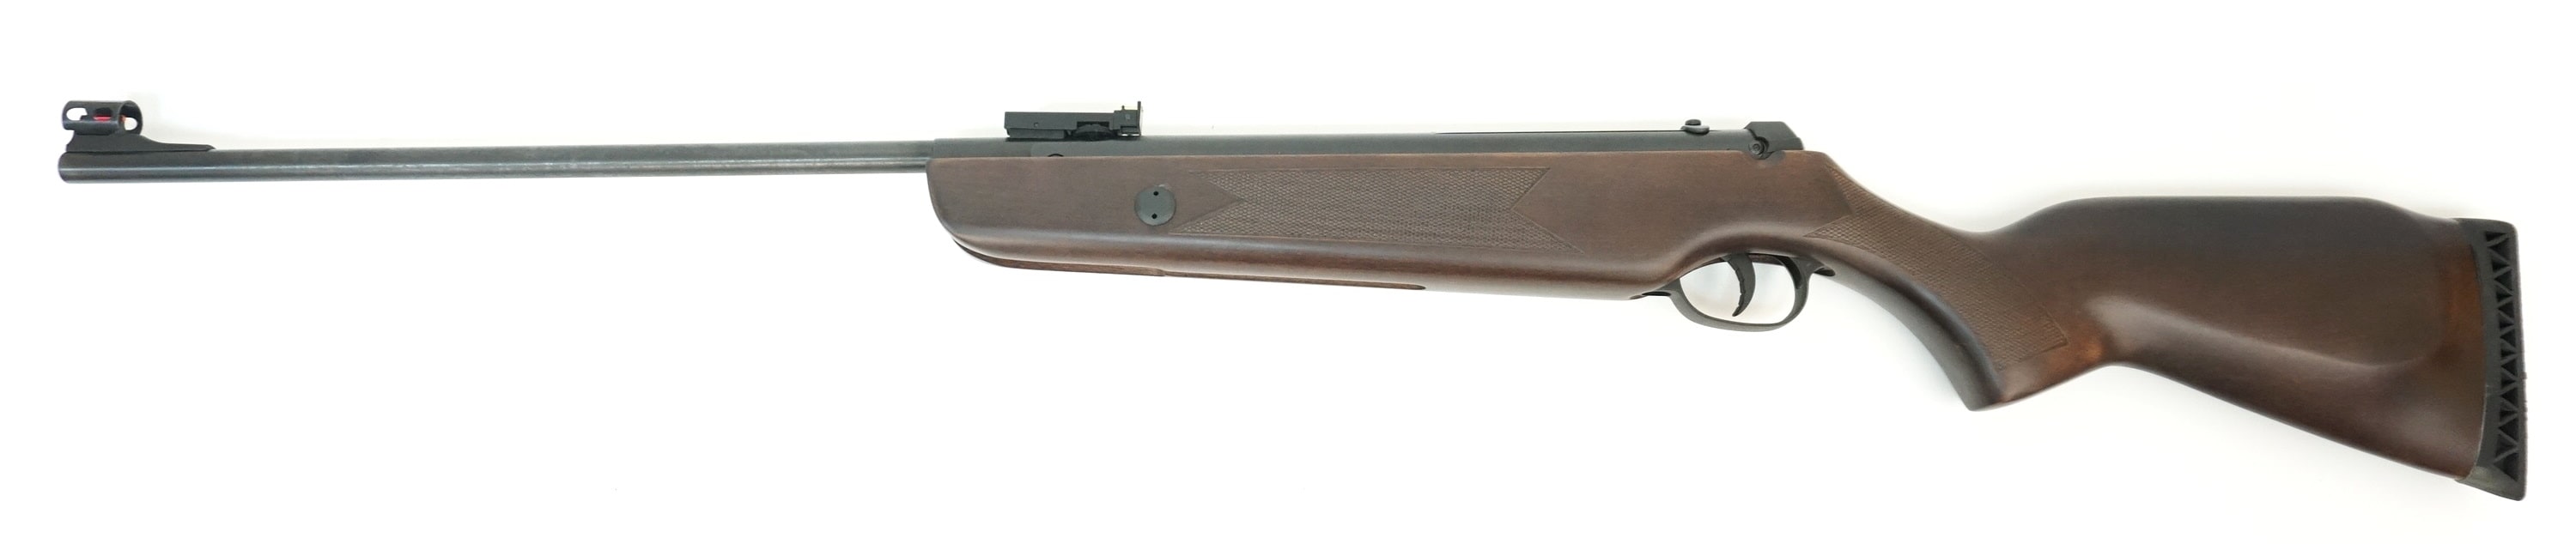 Пневматическая винтовка Umarex Hammerli Hunter Force 600 Combo, изображение 7